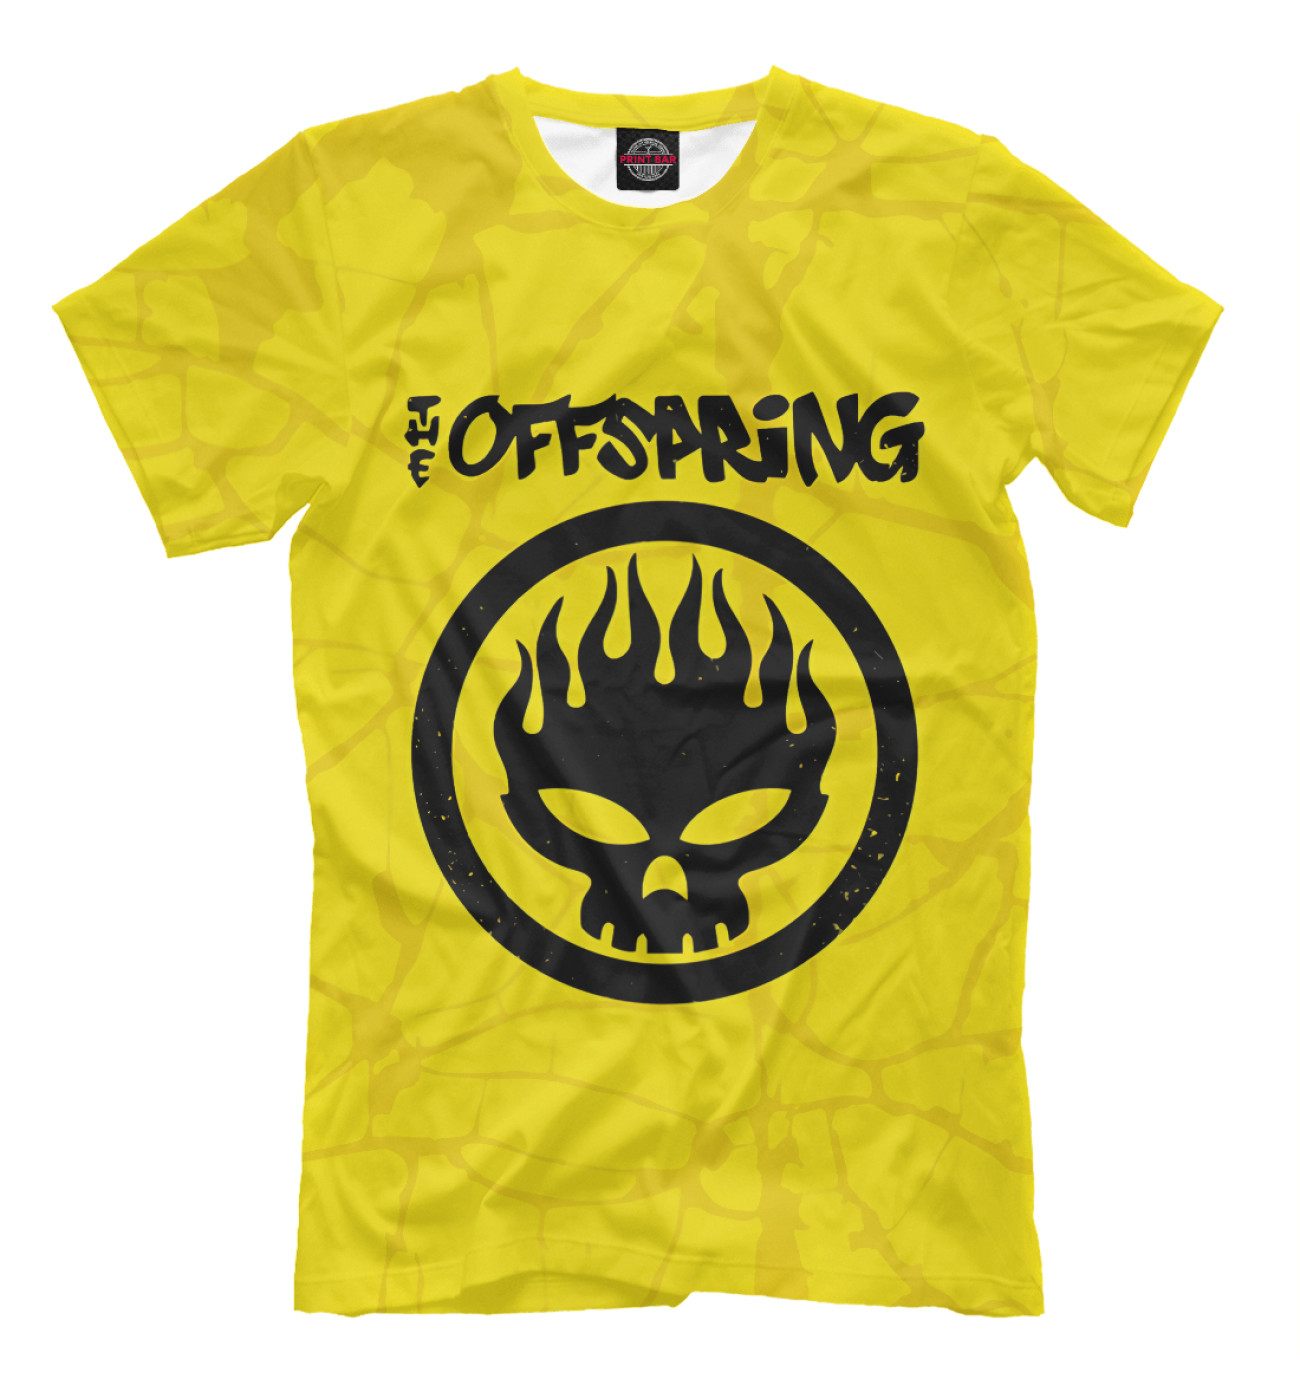 Мужская Футболка The Offspring, артикул: OFS-941898-fut-2